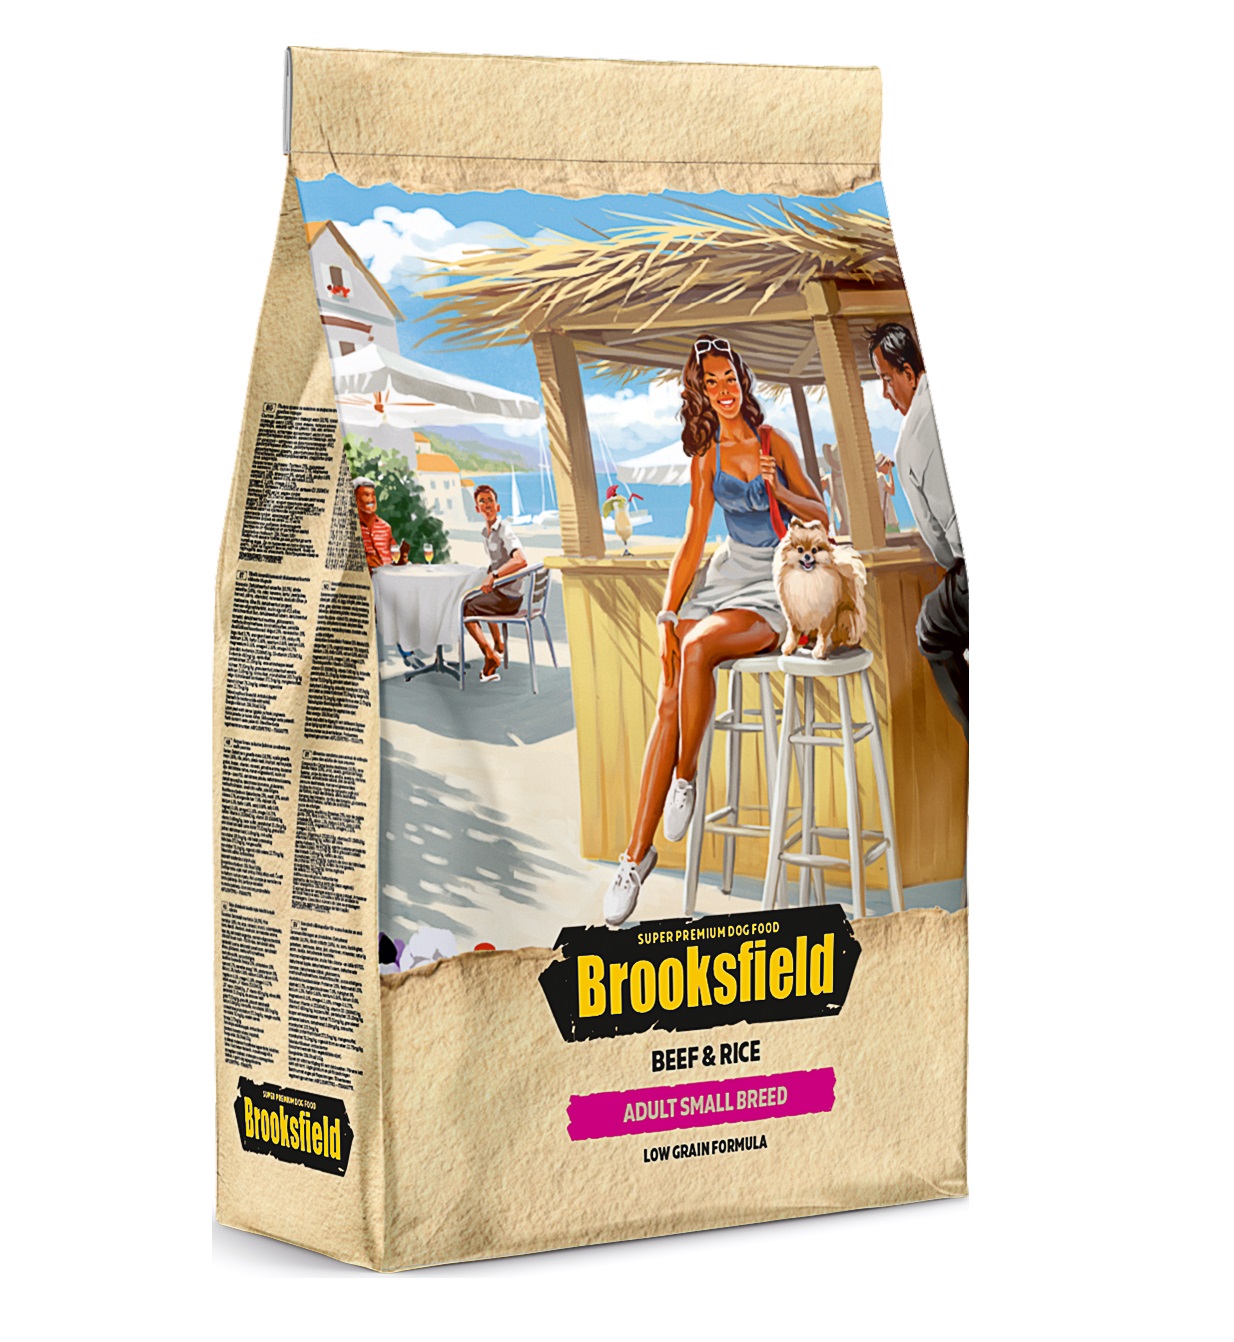 Бруксфилд 10кг - Говядина - для Мелких собак (Brooksfield)